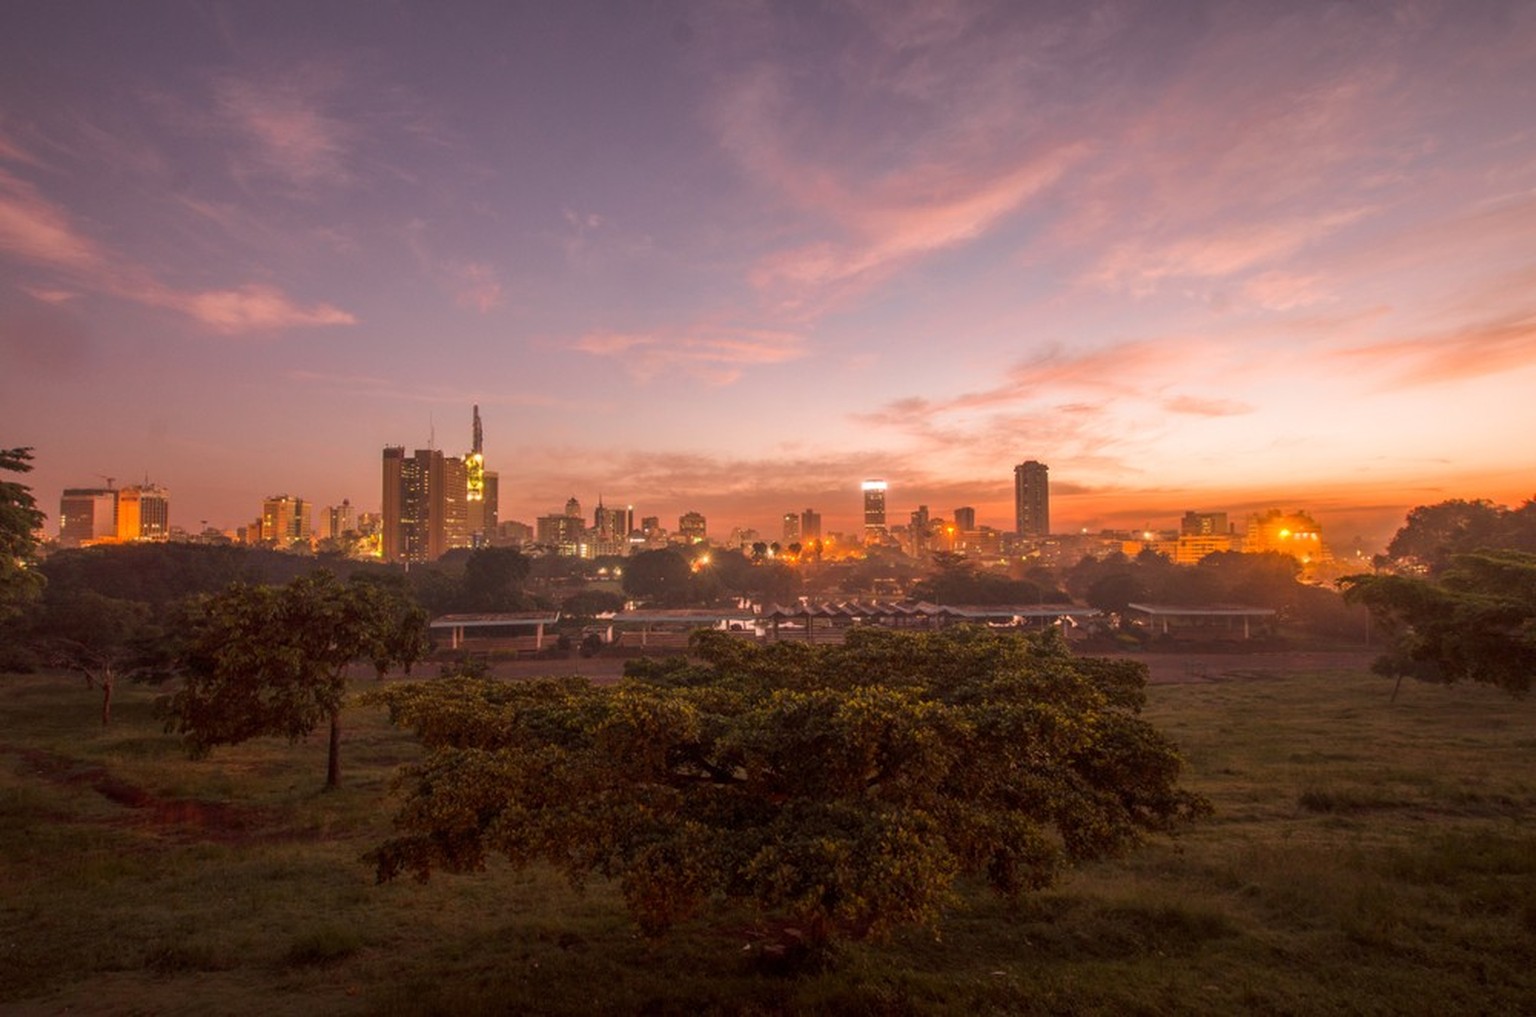 Les 50 plus beaux endroits du monde selon le TImes: Nairobi, Kenya